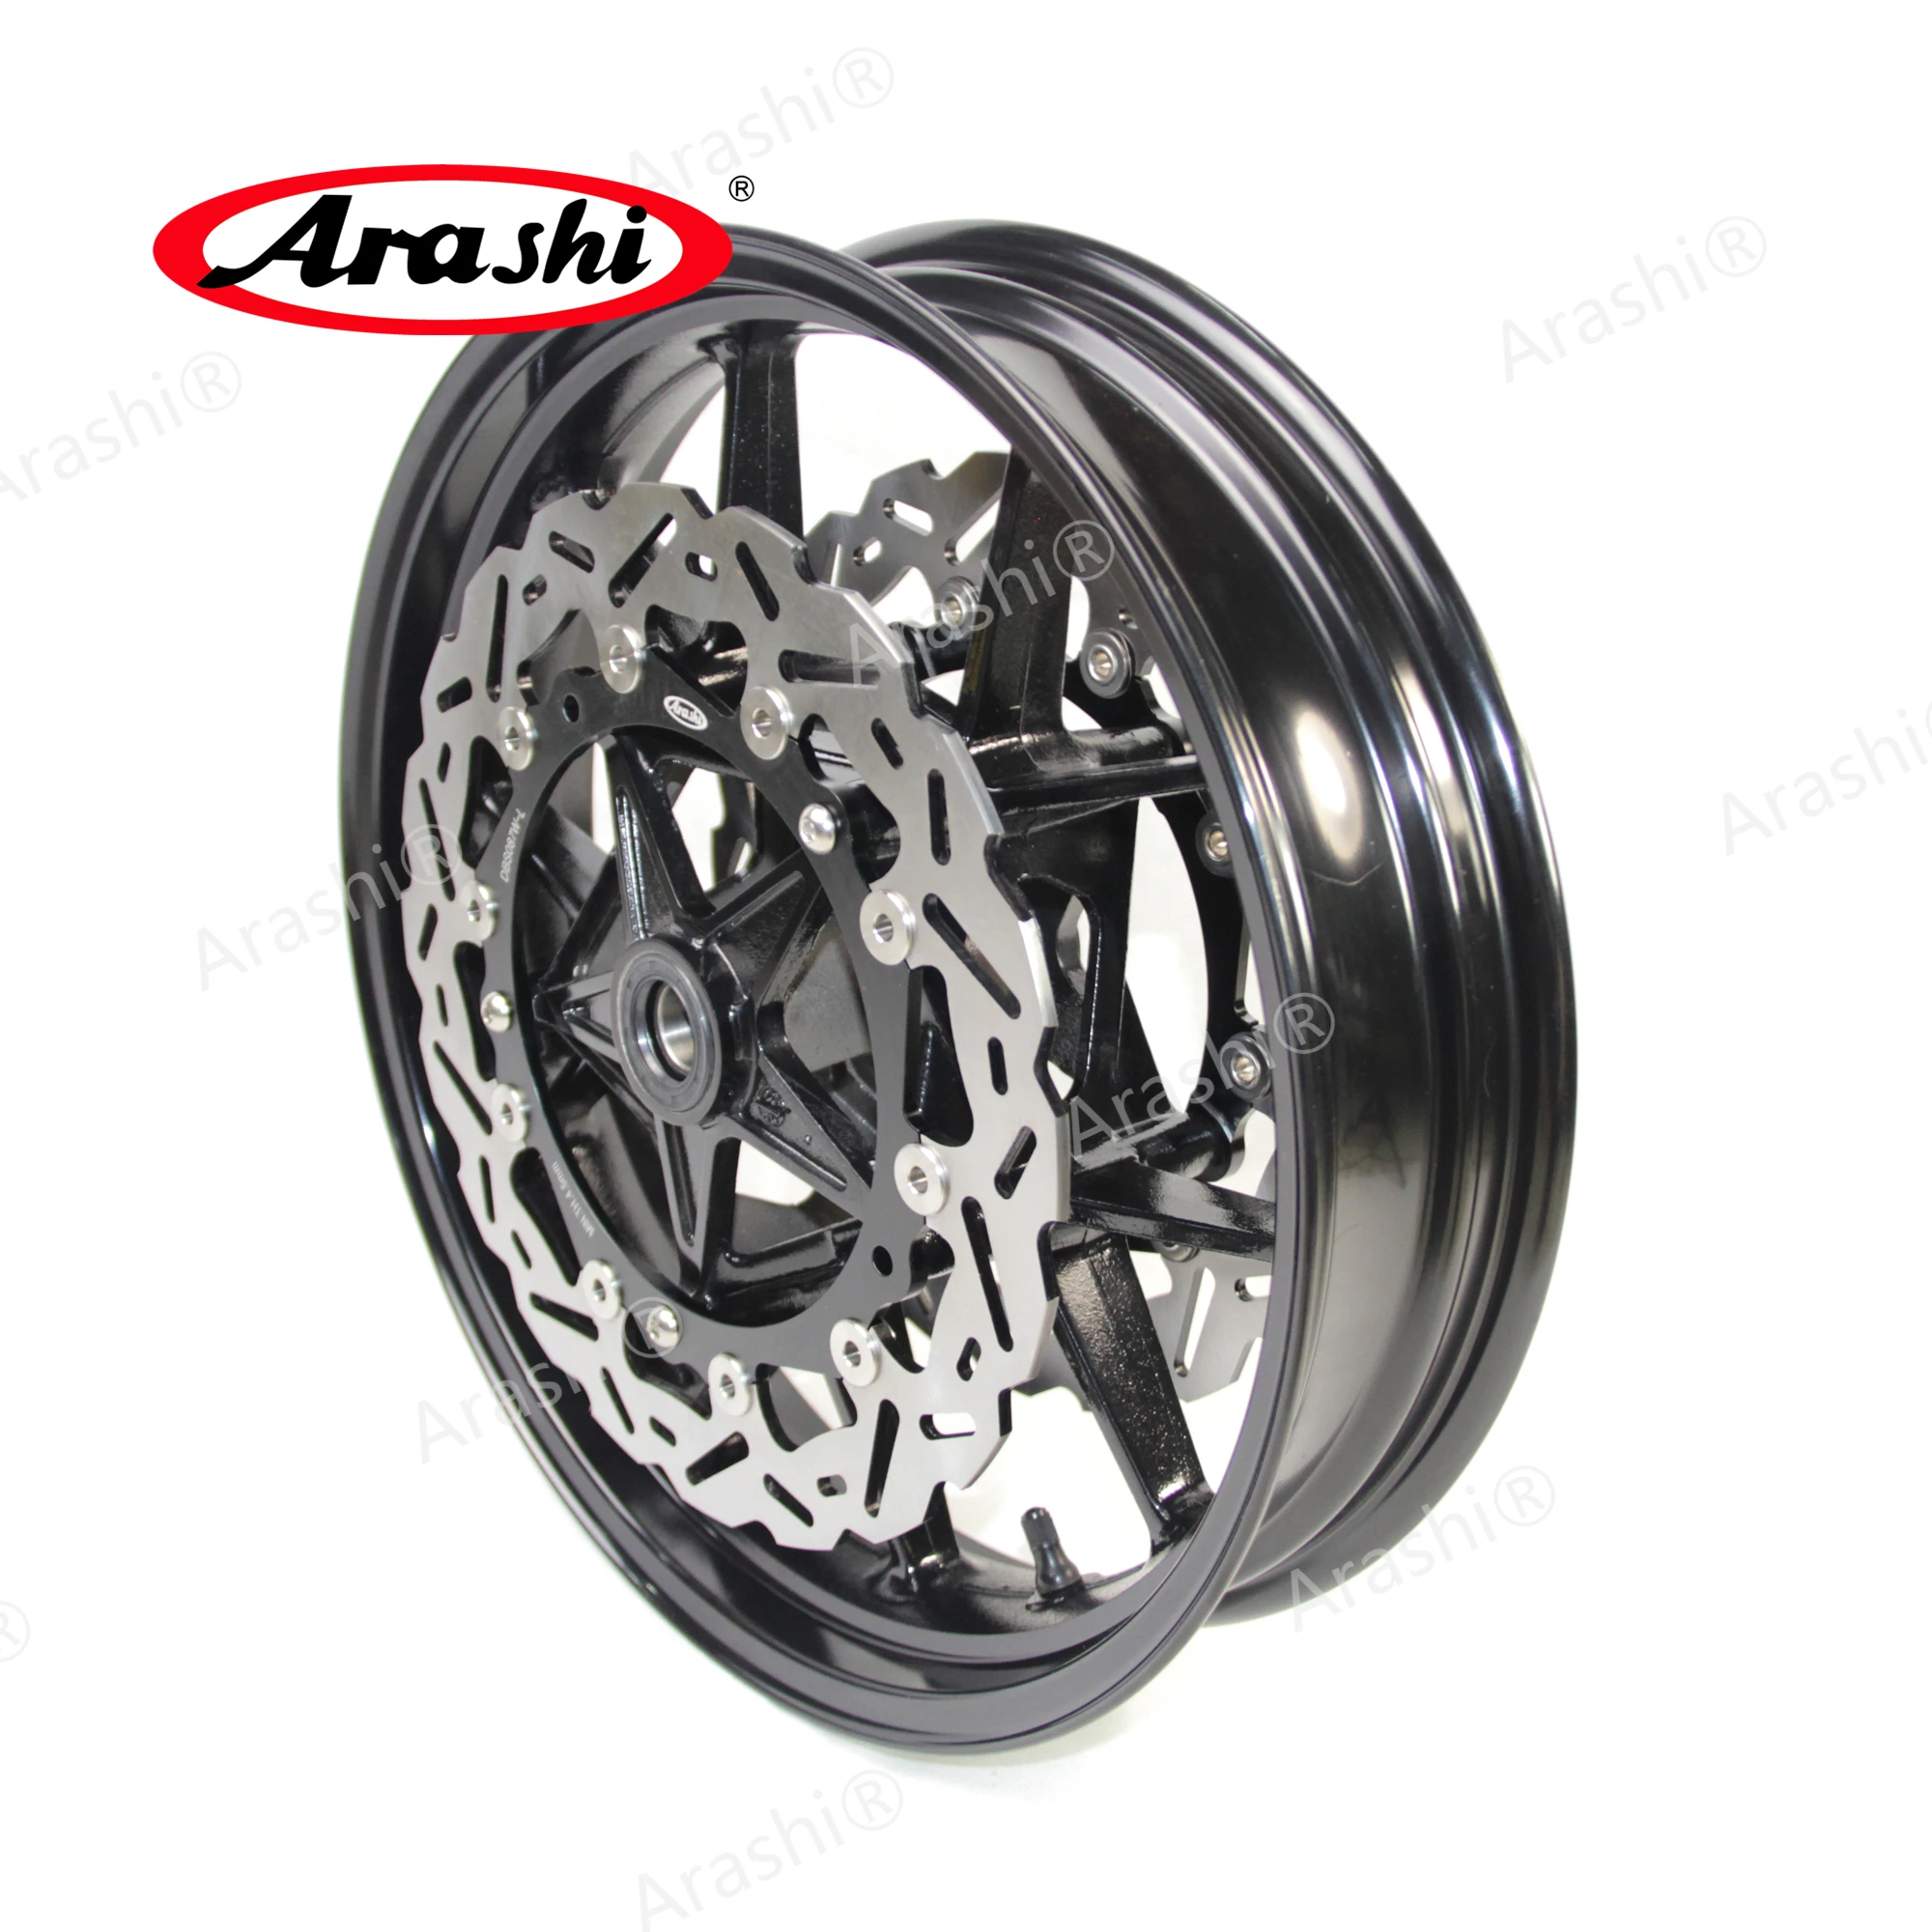 

ARASHI S1000RR / S1000R Front Wheel Rim Floating Brake Disc Rotor For BMW S1000 S1000RR 2009 - 2018 / S 1000 R 2014-2018